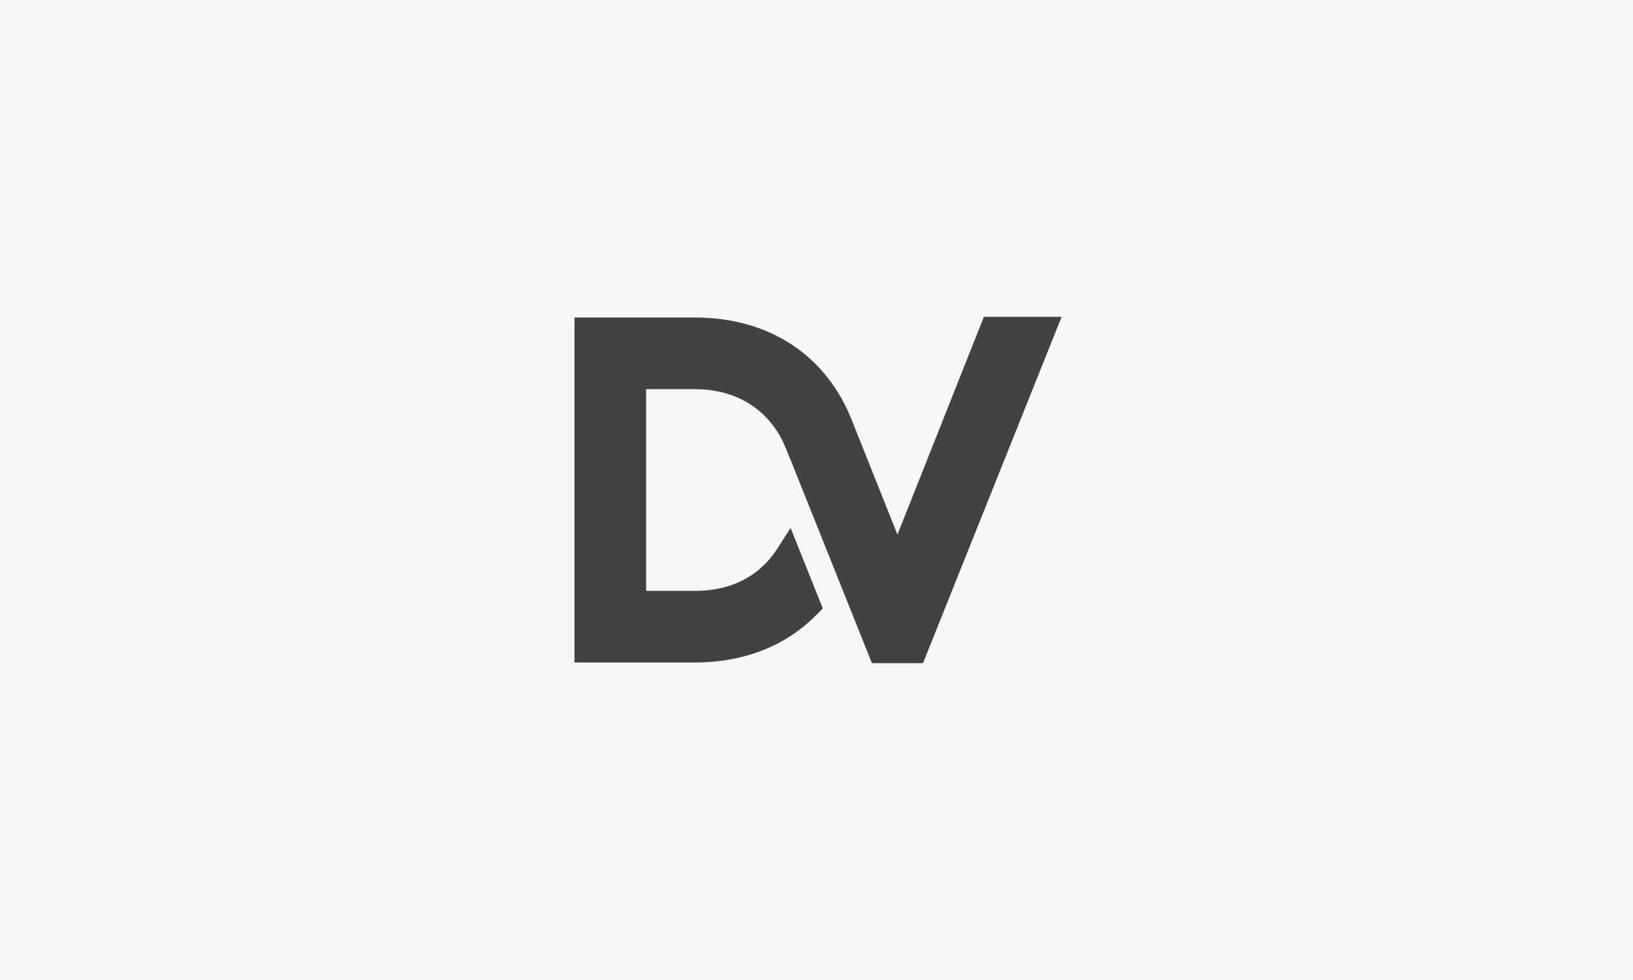 DV letter logo concept isolated on white background. vector